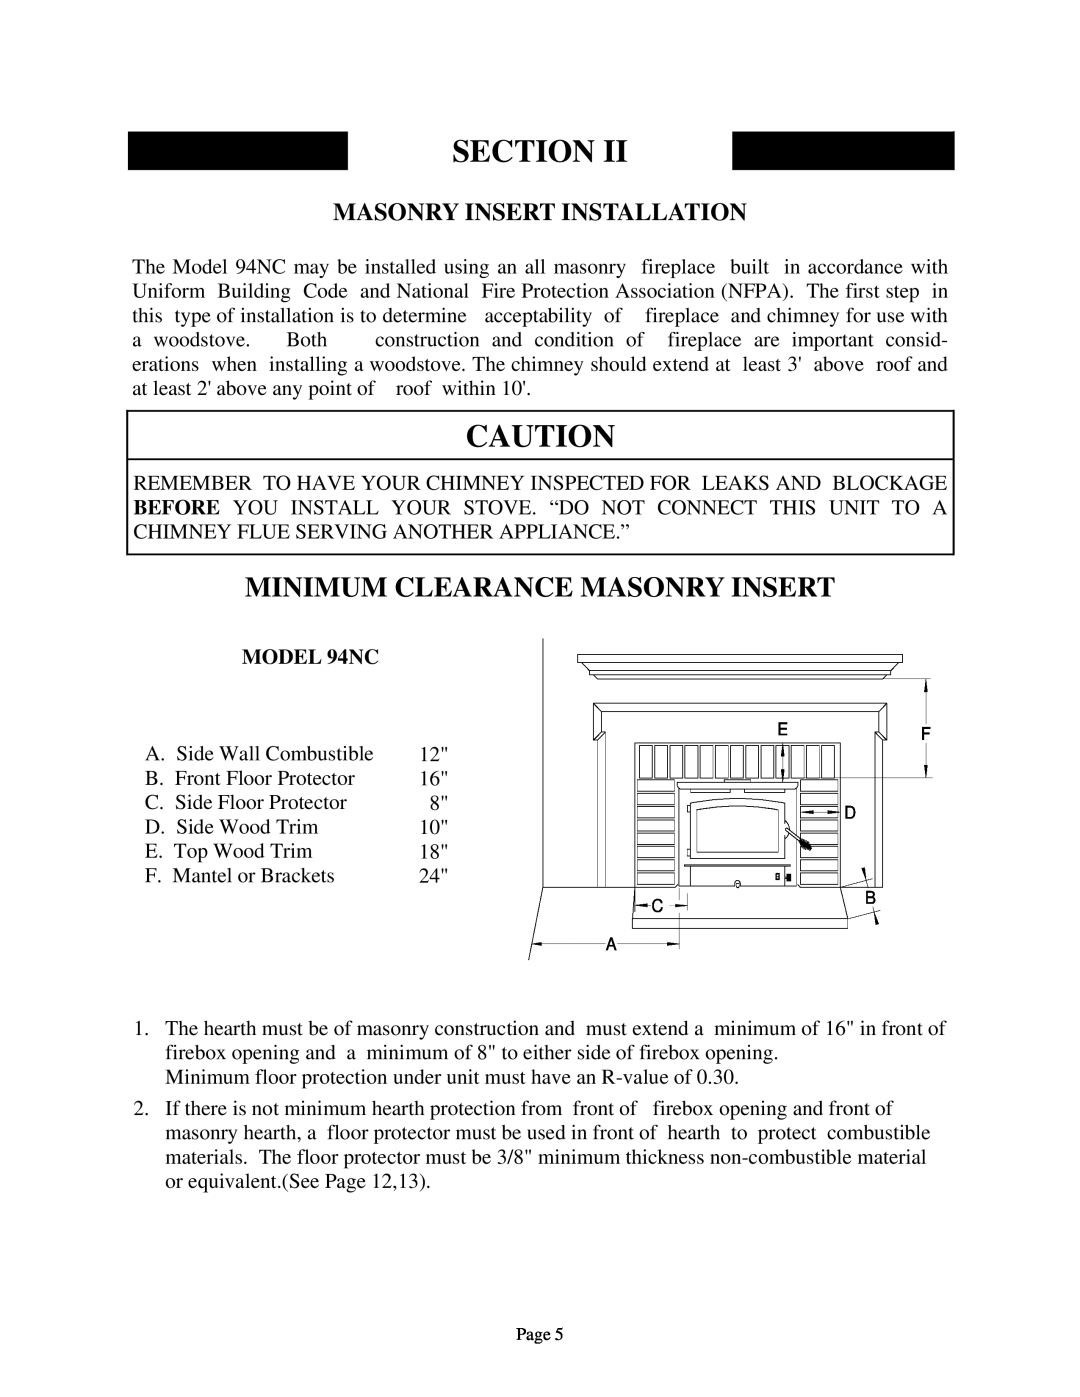 New Buck Corporation 94NC installation instructions Minimum Clearance Masonry Insert, Section, Masonry Insert Installation 